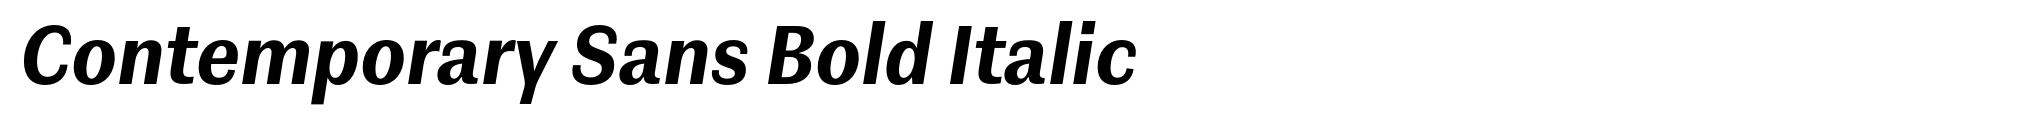 Contemporary Sans Bold Italic image